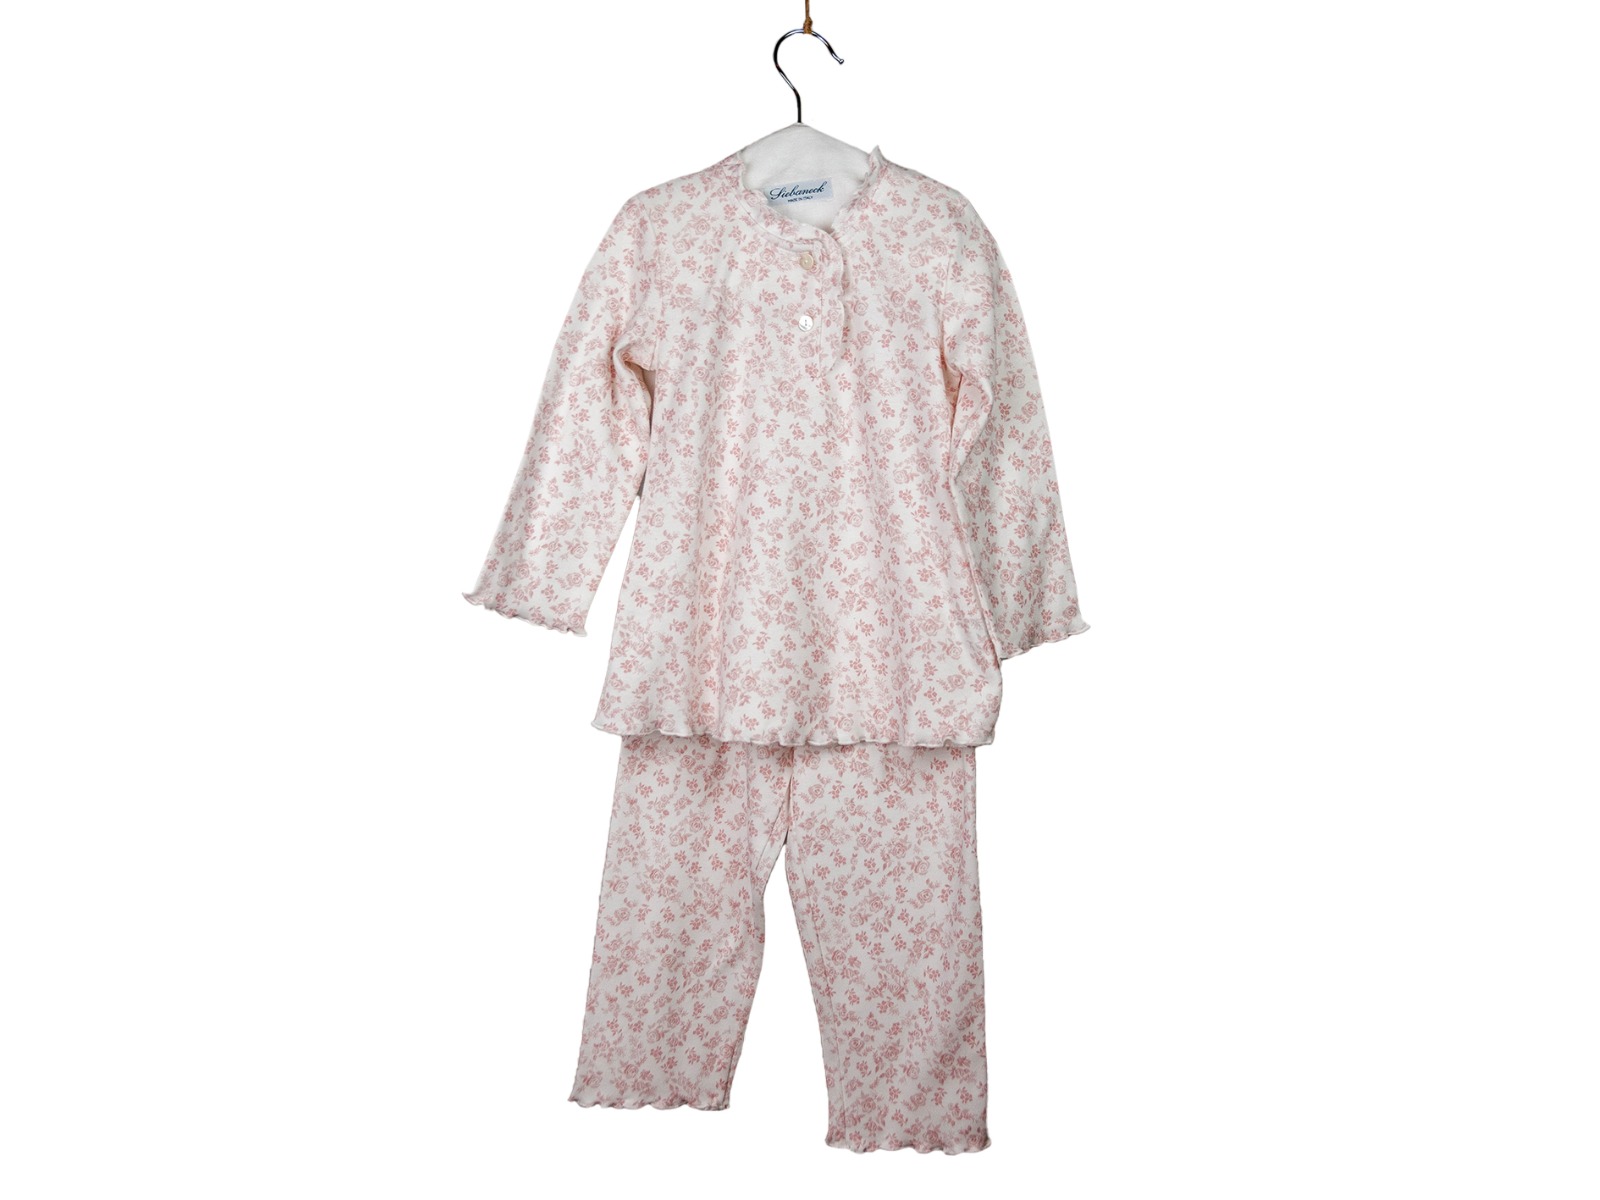 Siebaneck, i pigiami artigianali italiani: - bambina - mod.8 Bis rosa